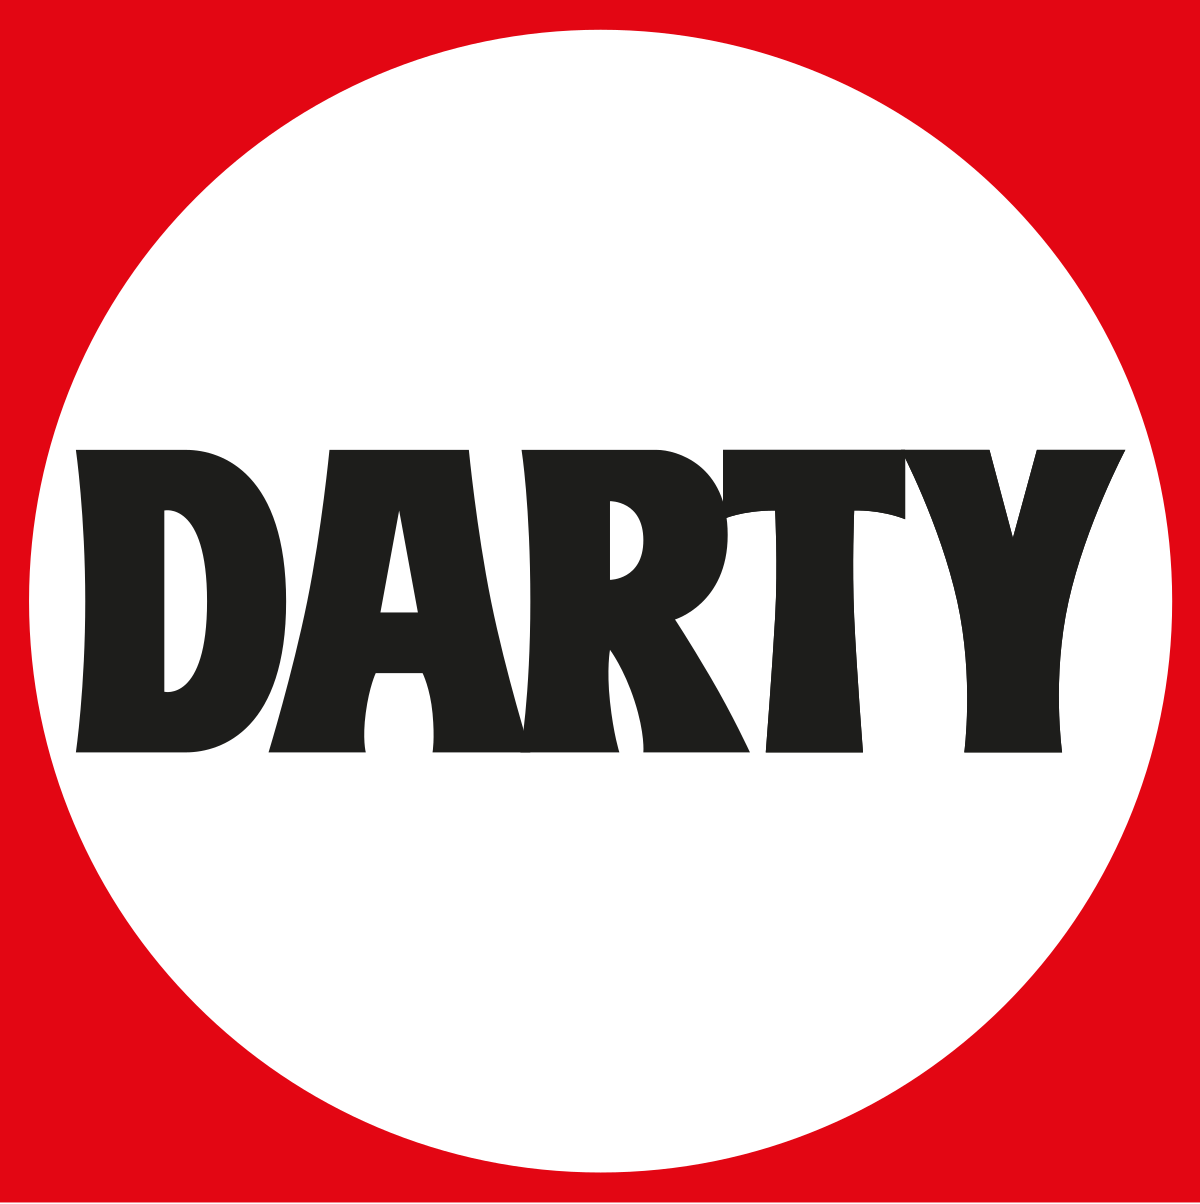 logo Darty